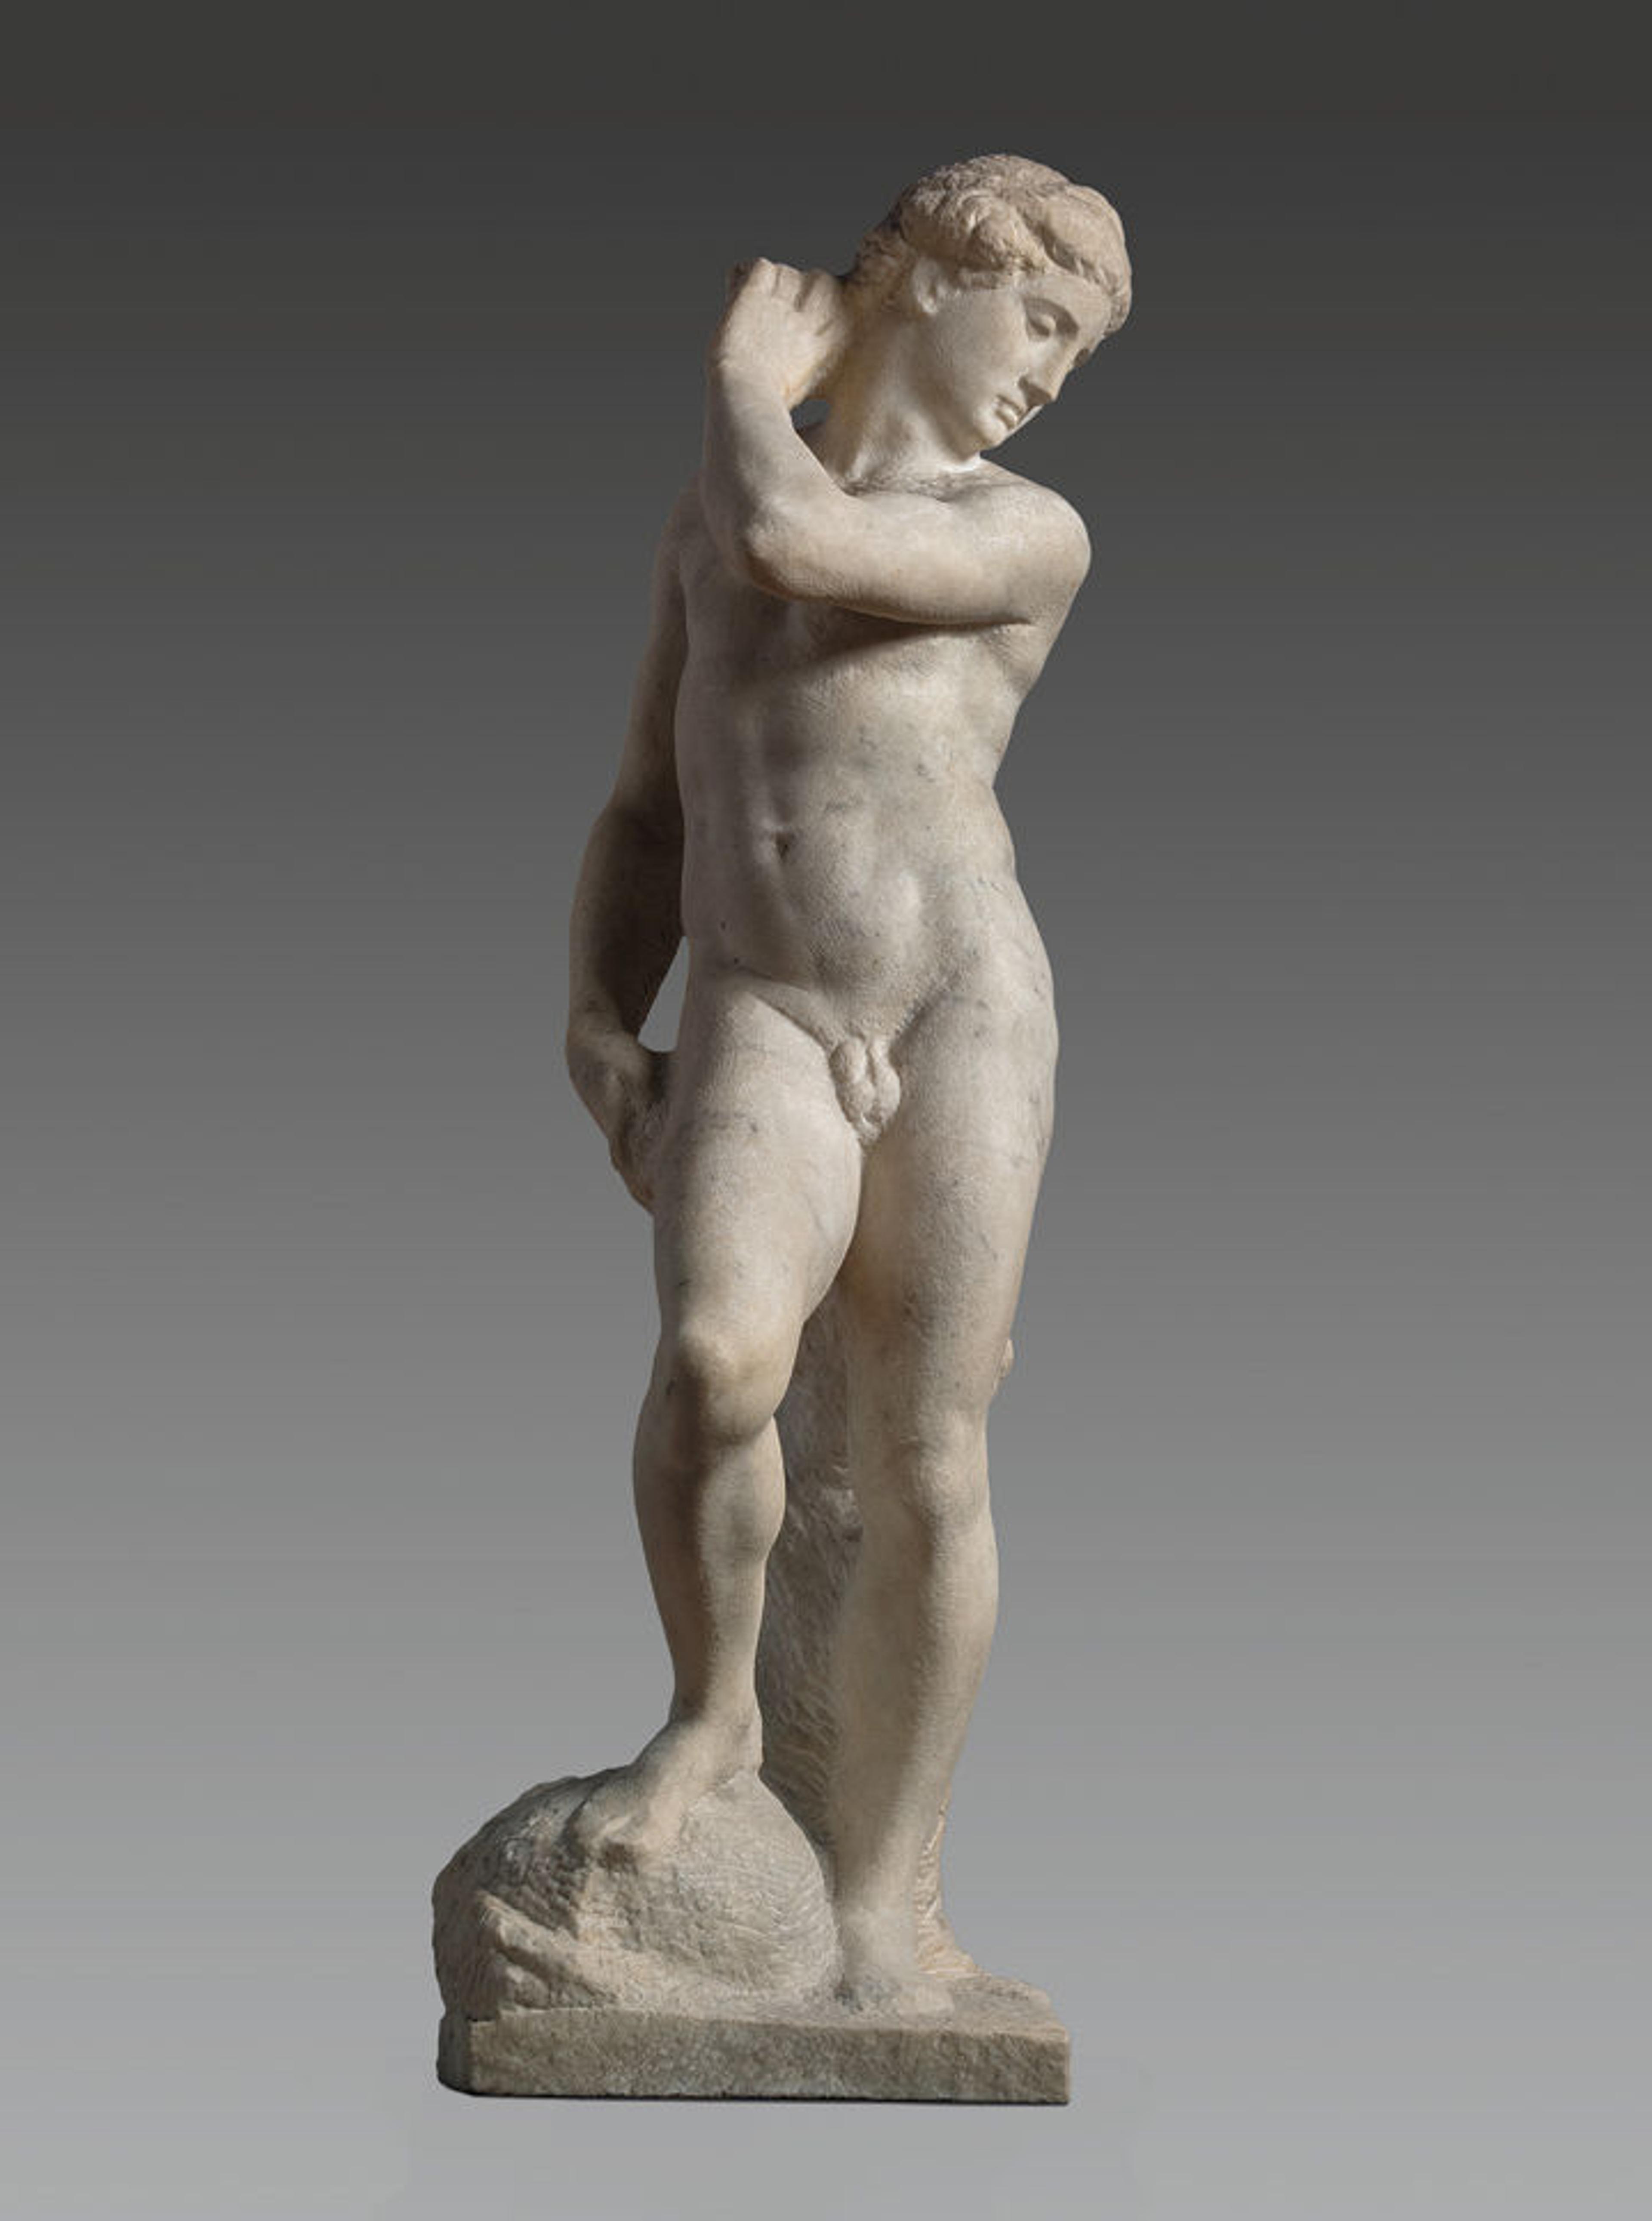 View of Michelangelo's marble sculpture David-Apollo